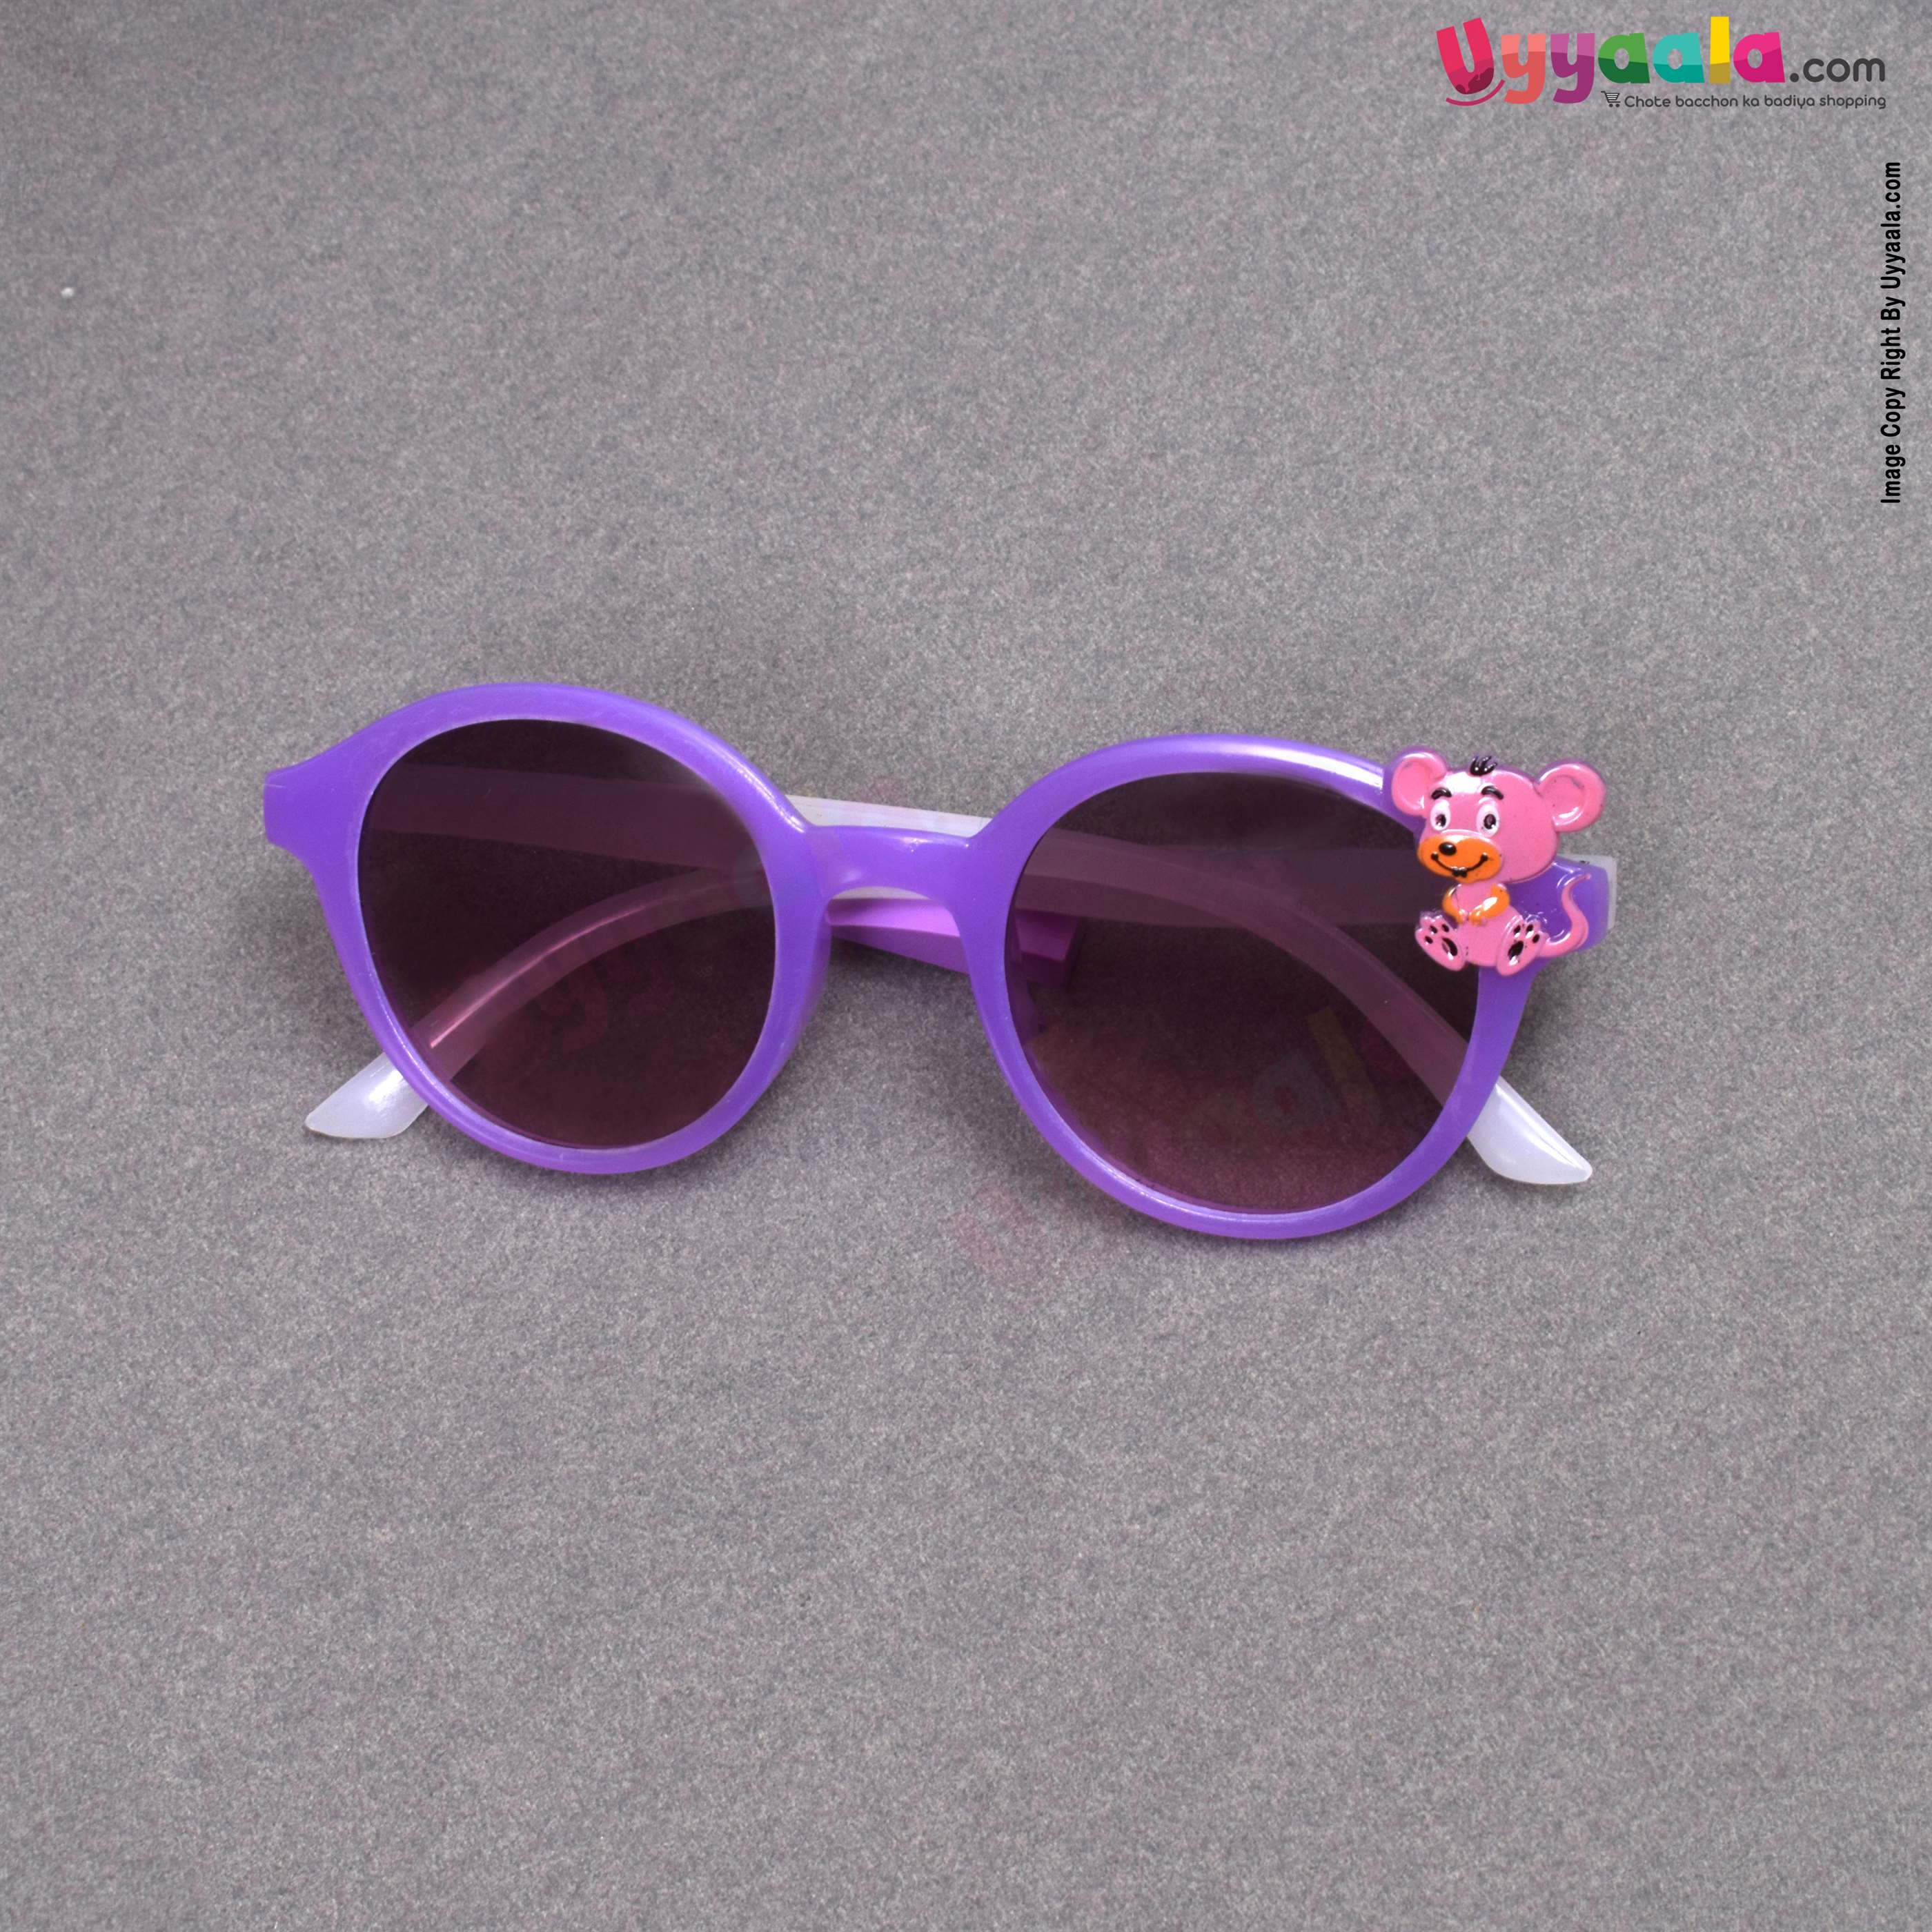 Stylish cat-eye tinted sunglasses for kids - purple & white